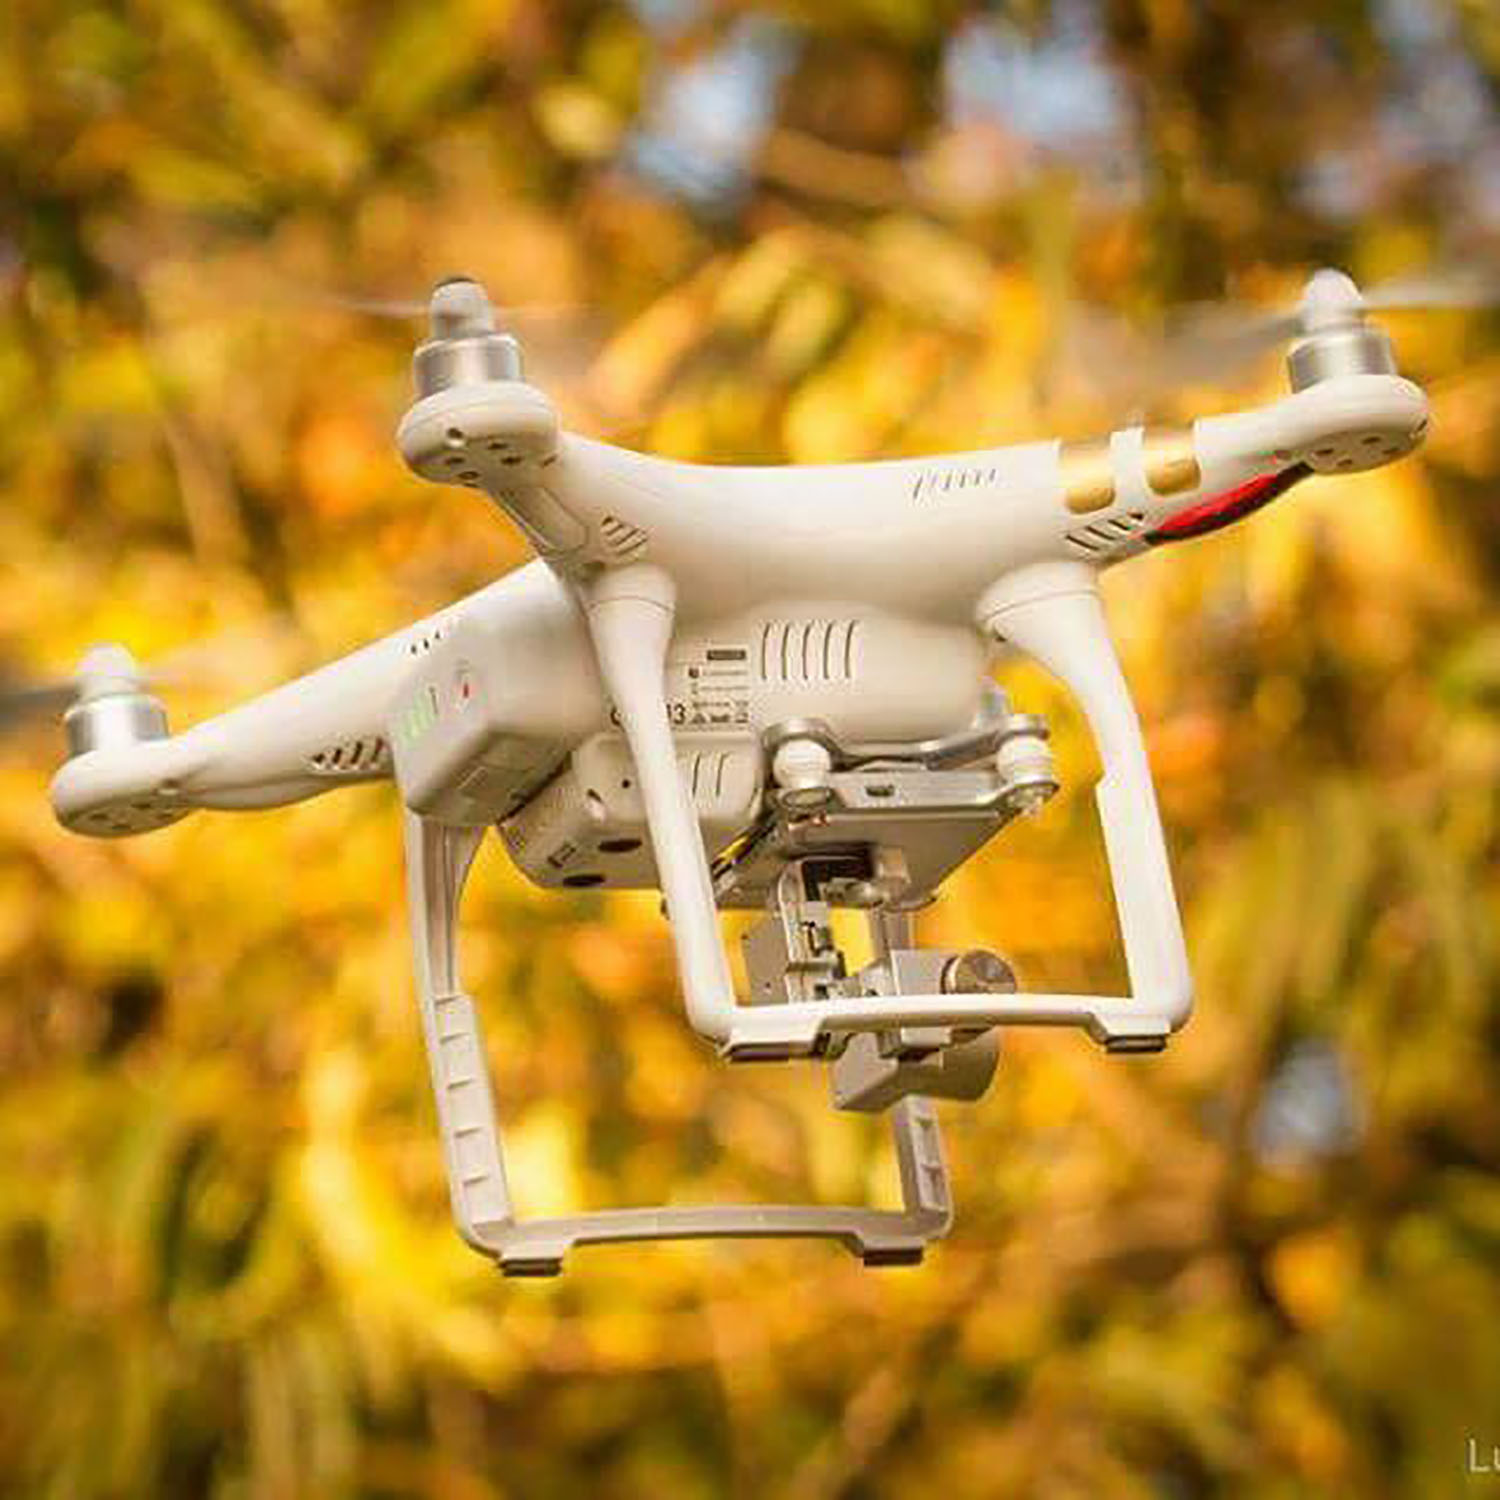 A Era dos drones